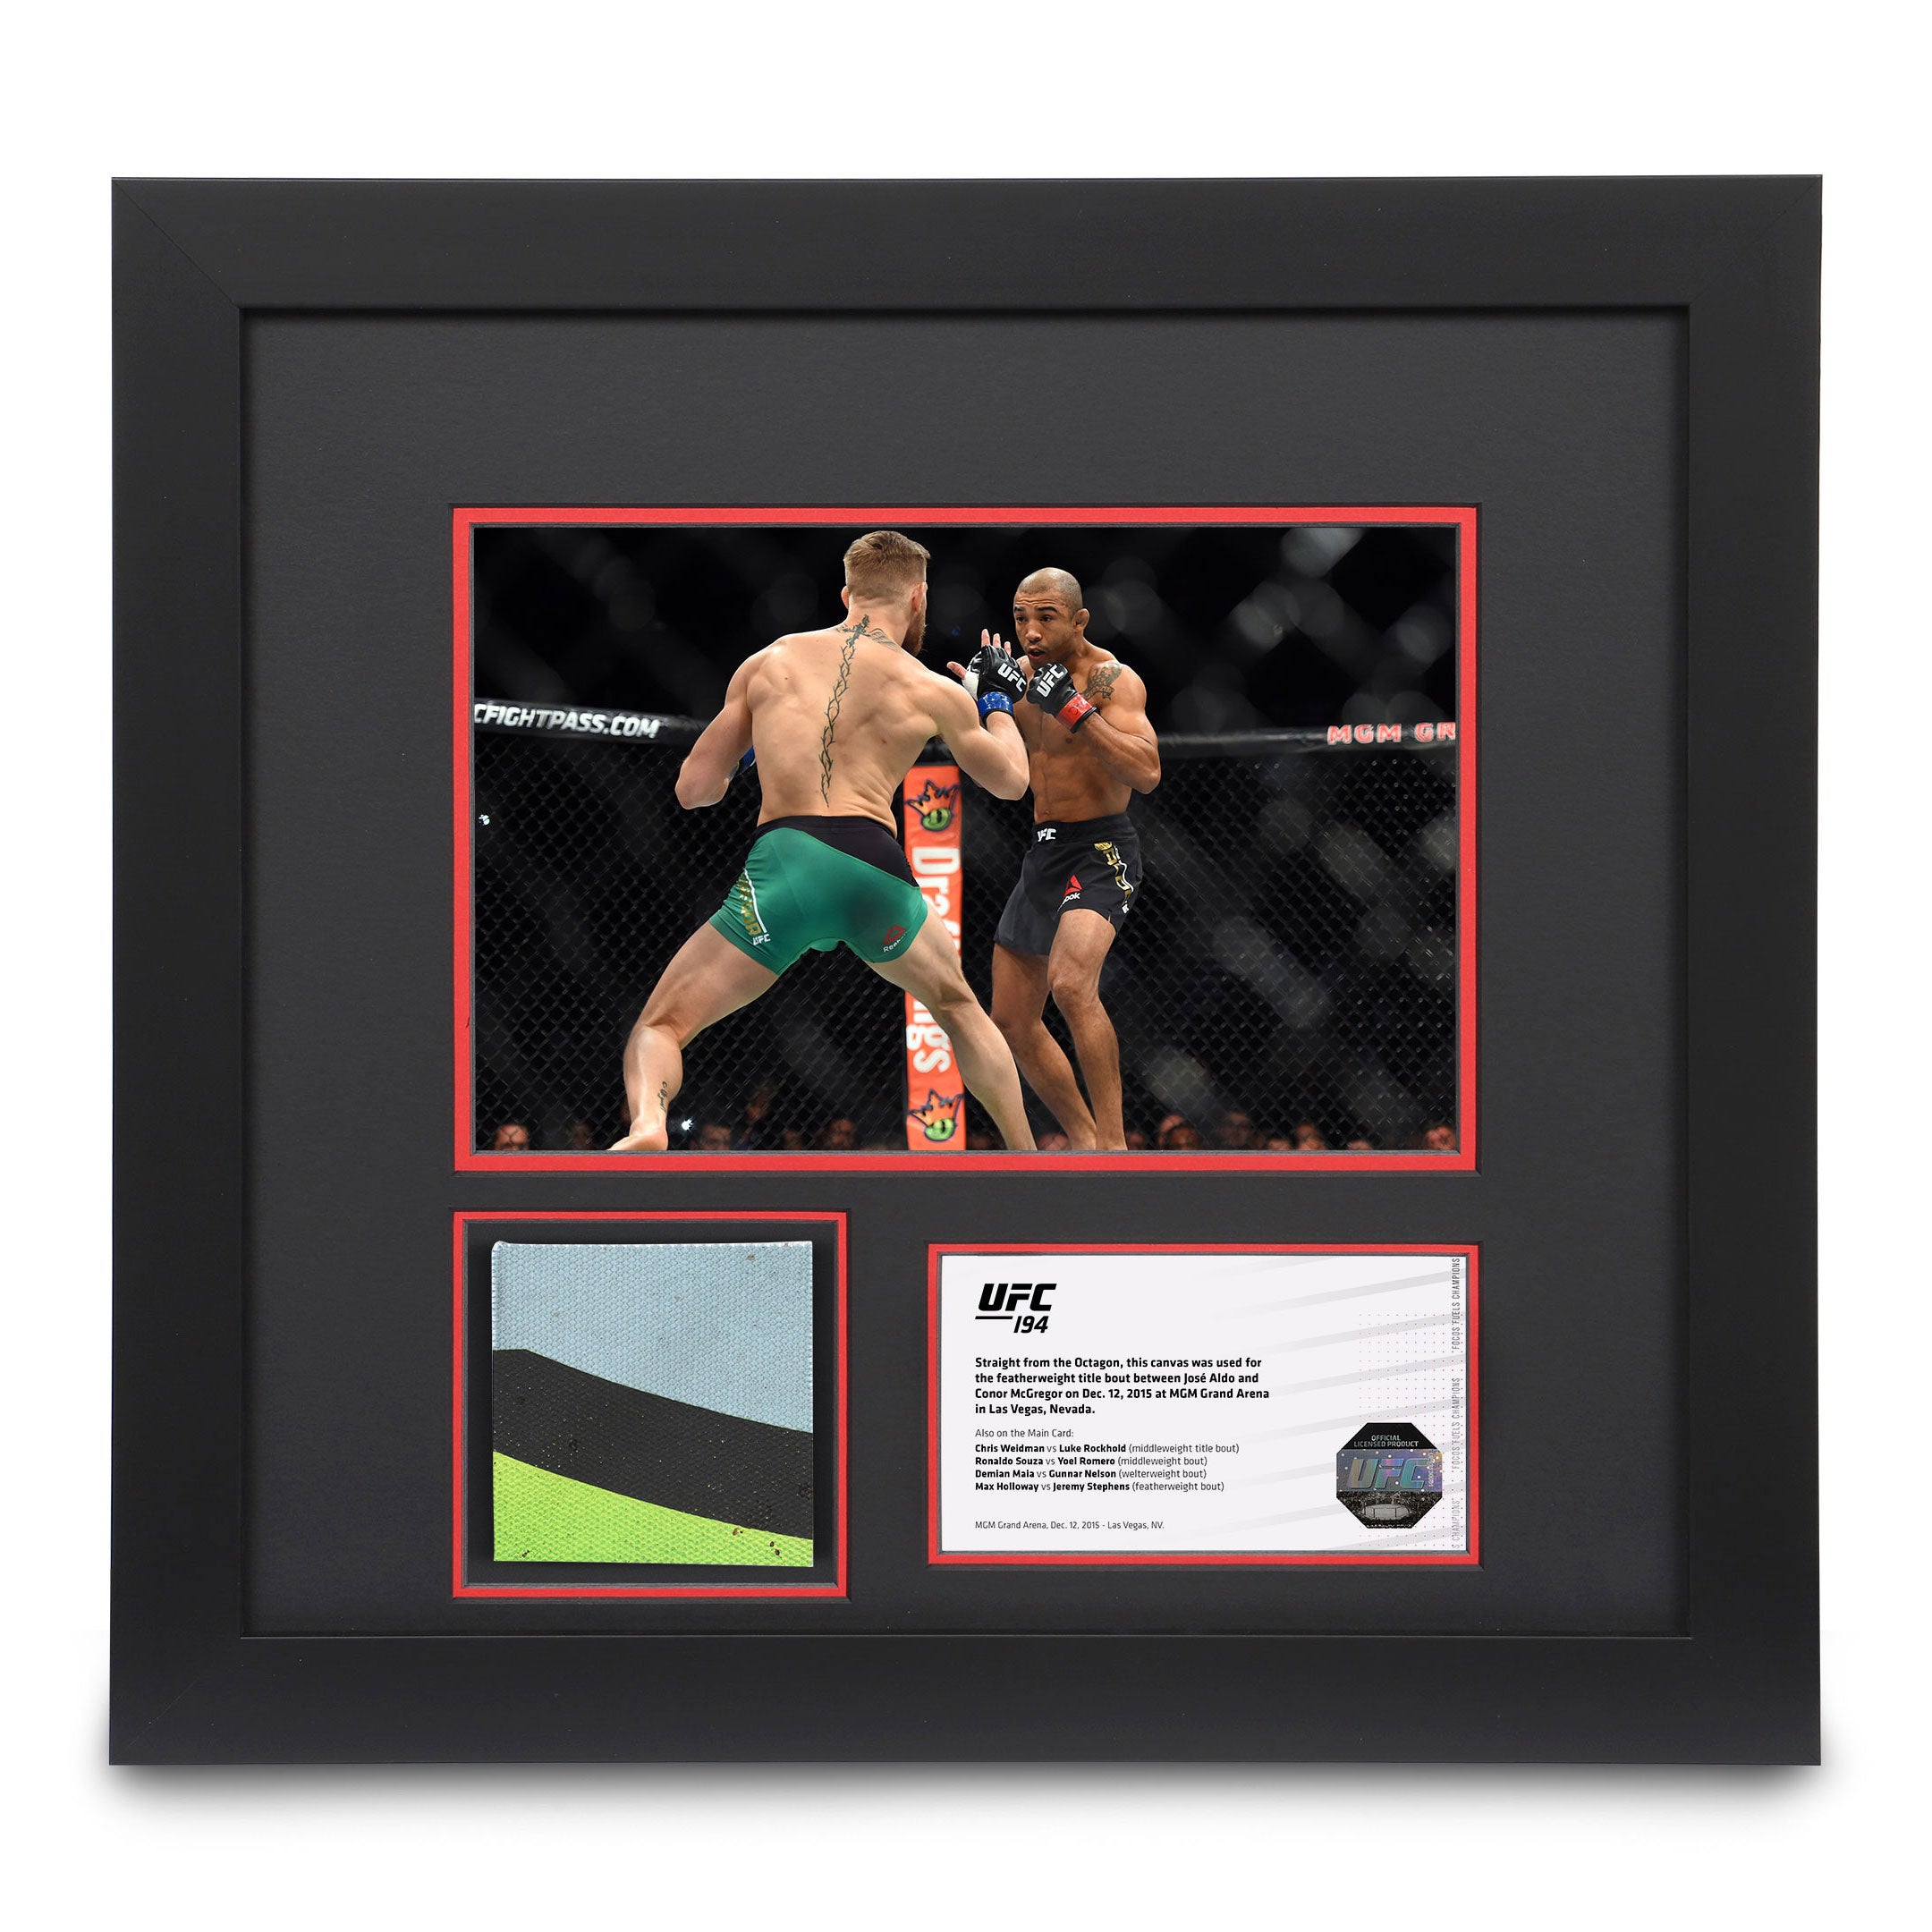 Canvas & Photo from the Jose Aldo vs Conor McGregor UFC 194 event 